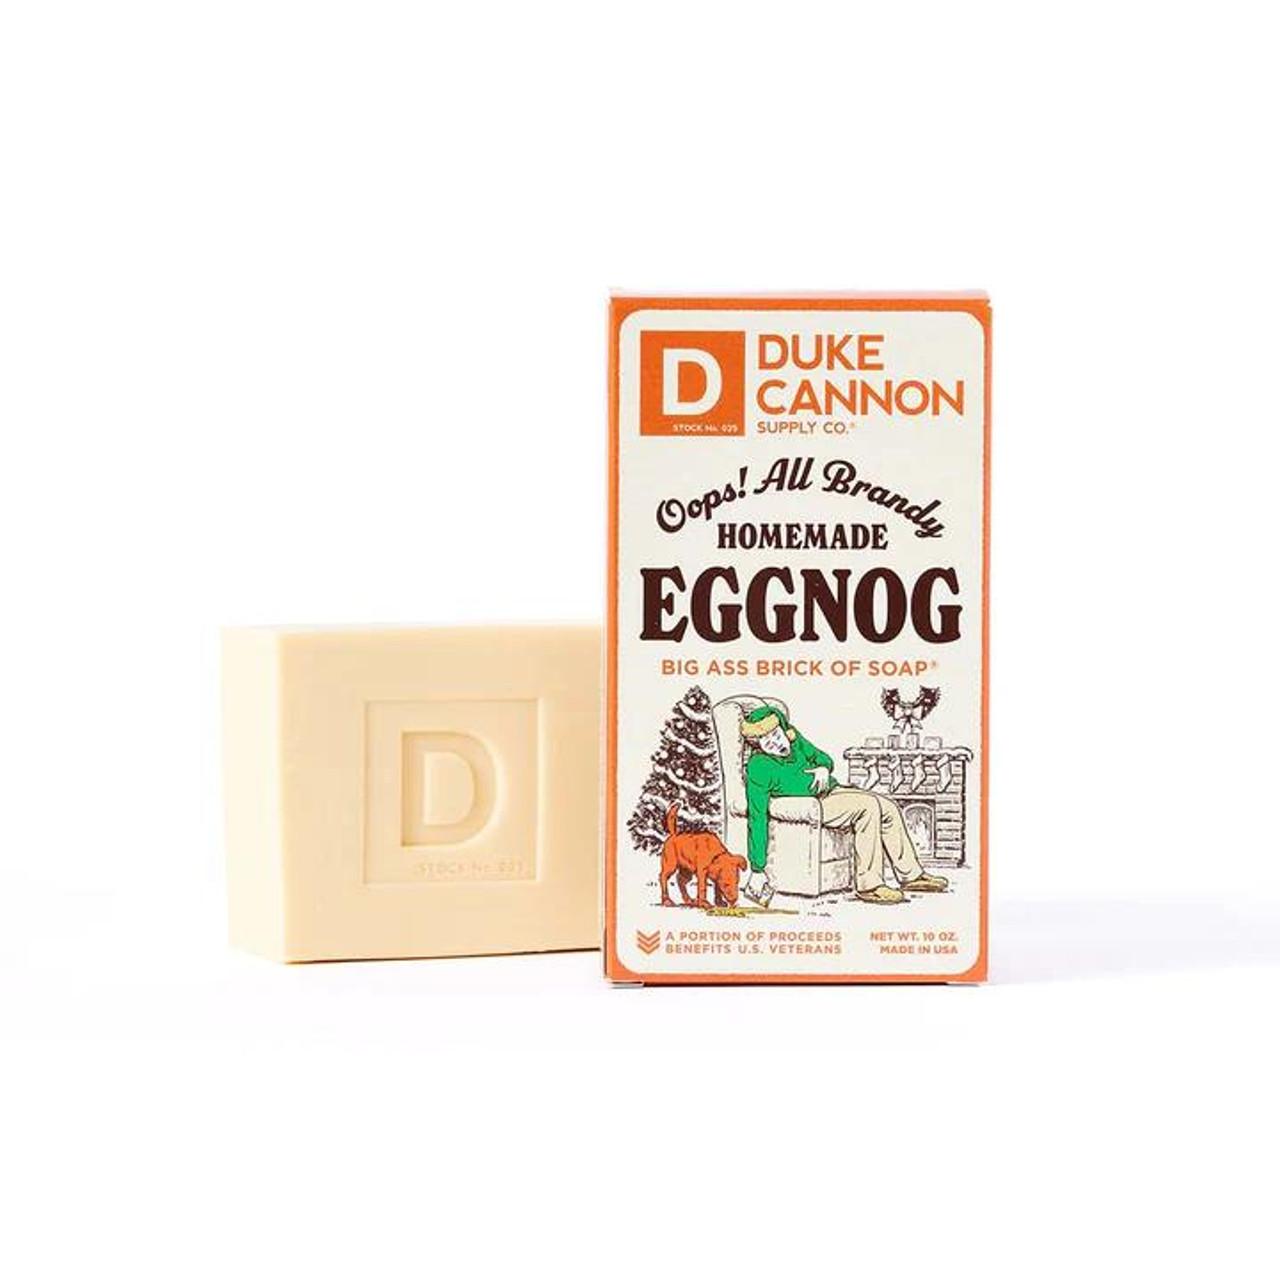 Duke Cannon Big Ass Brick of Soap- Oops! All Brandy Homemade Eggnog